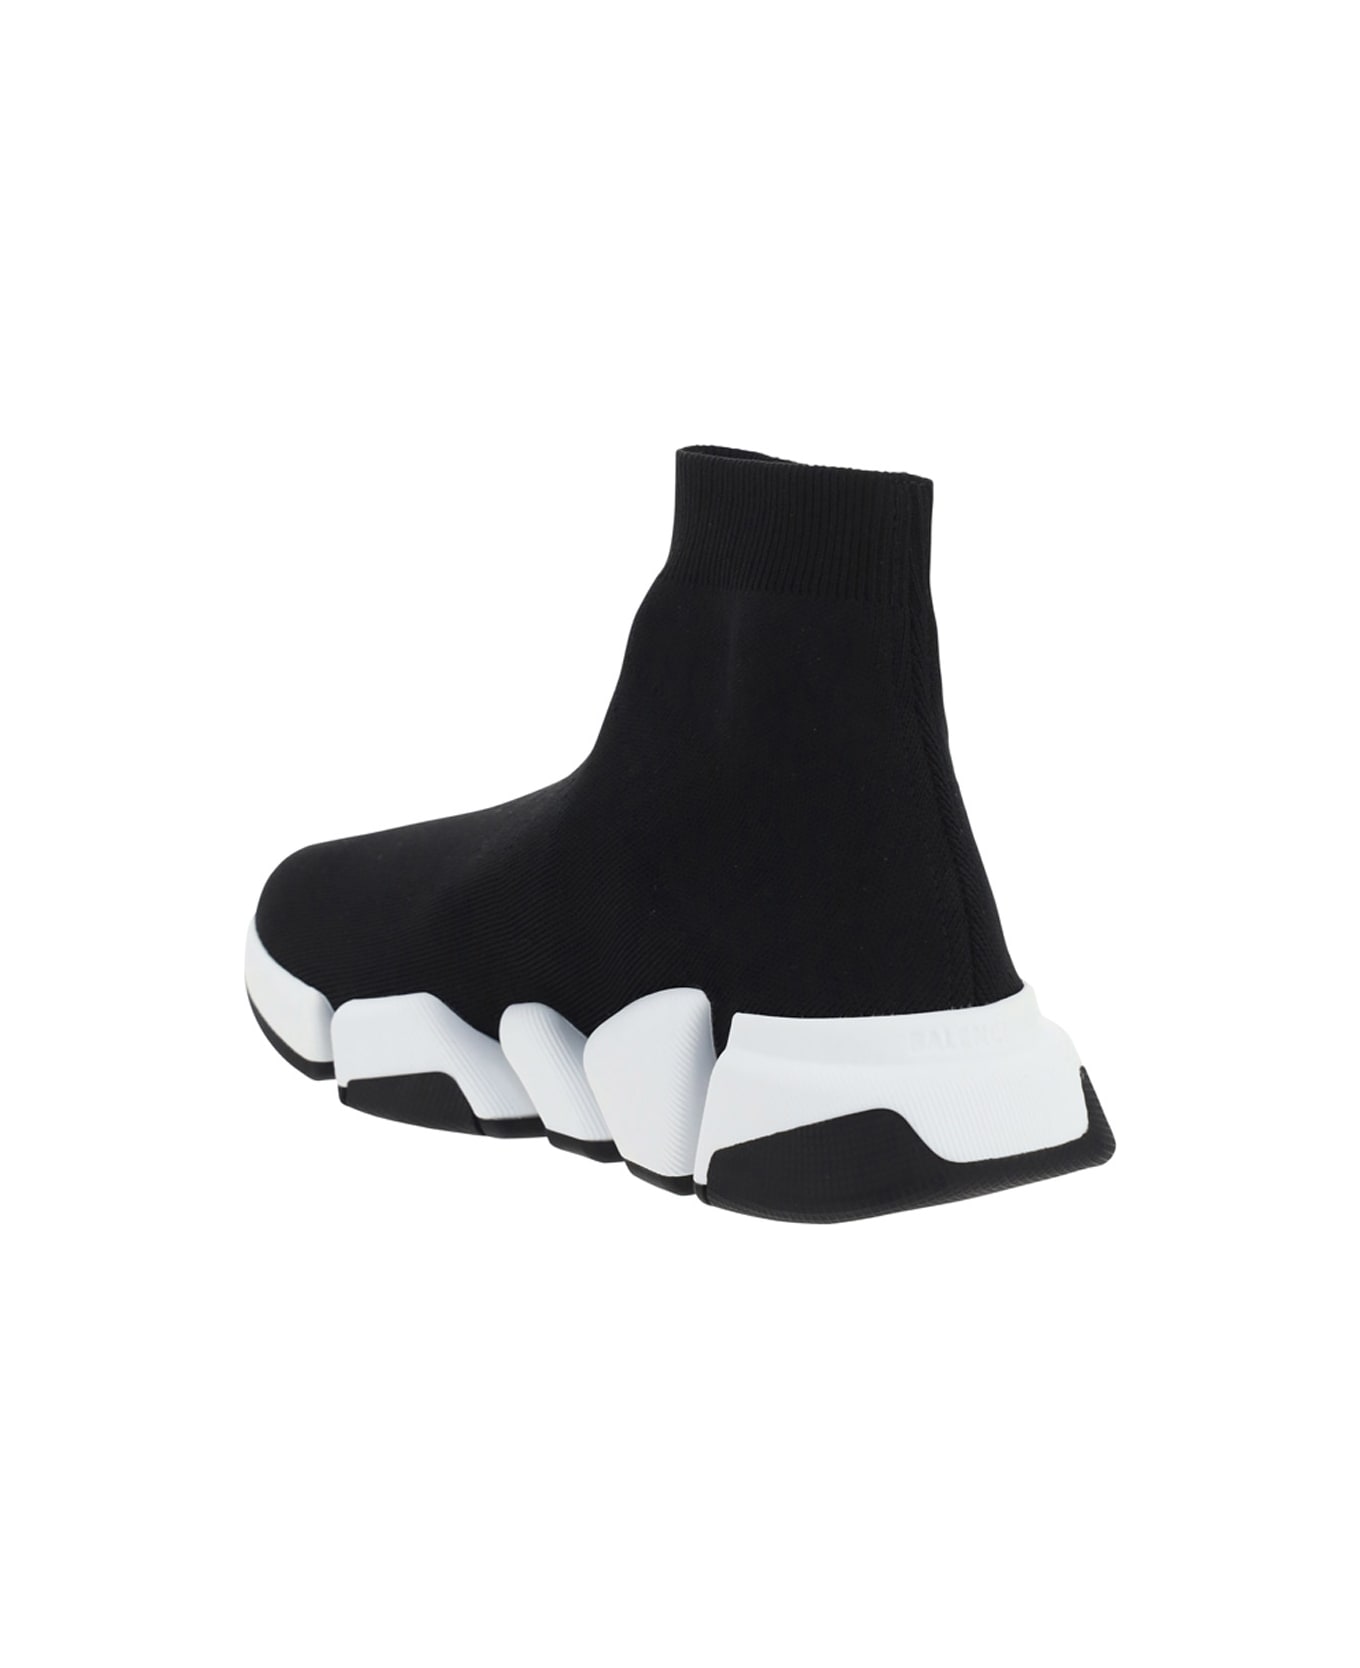 Balenciaga Speed 2.0 Lt Sock Sneakers - Black